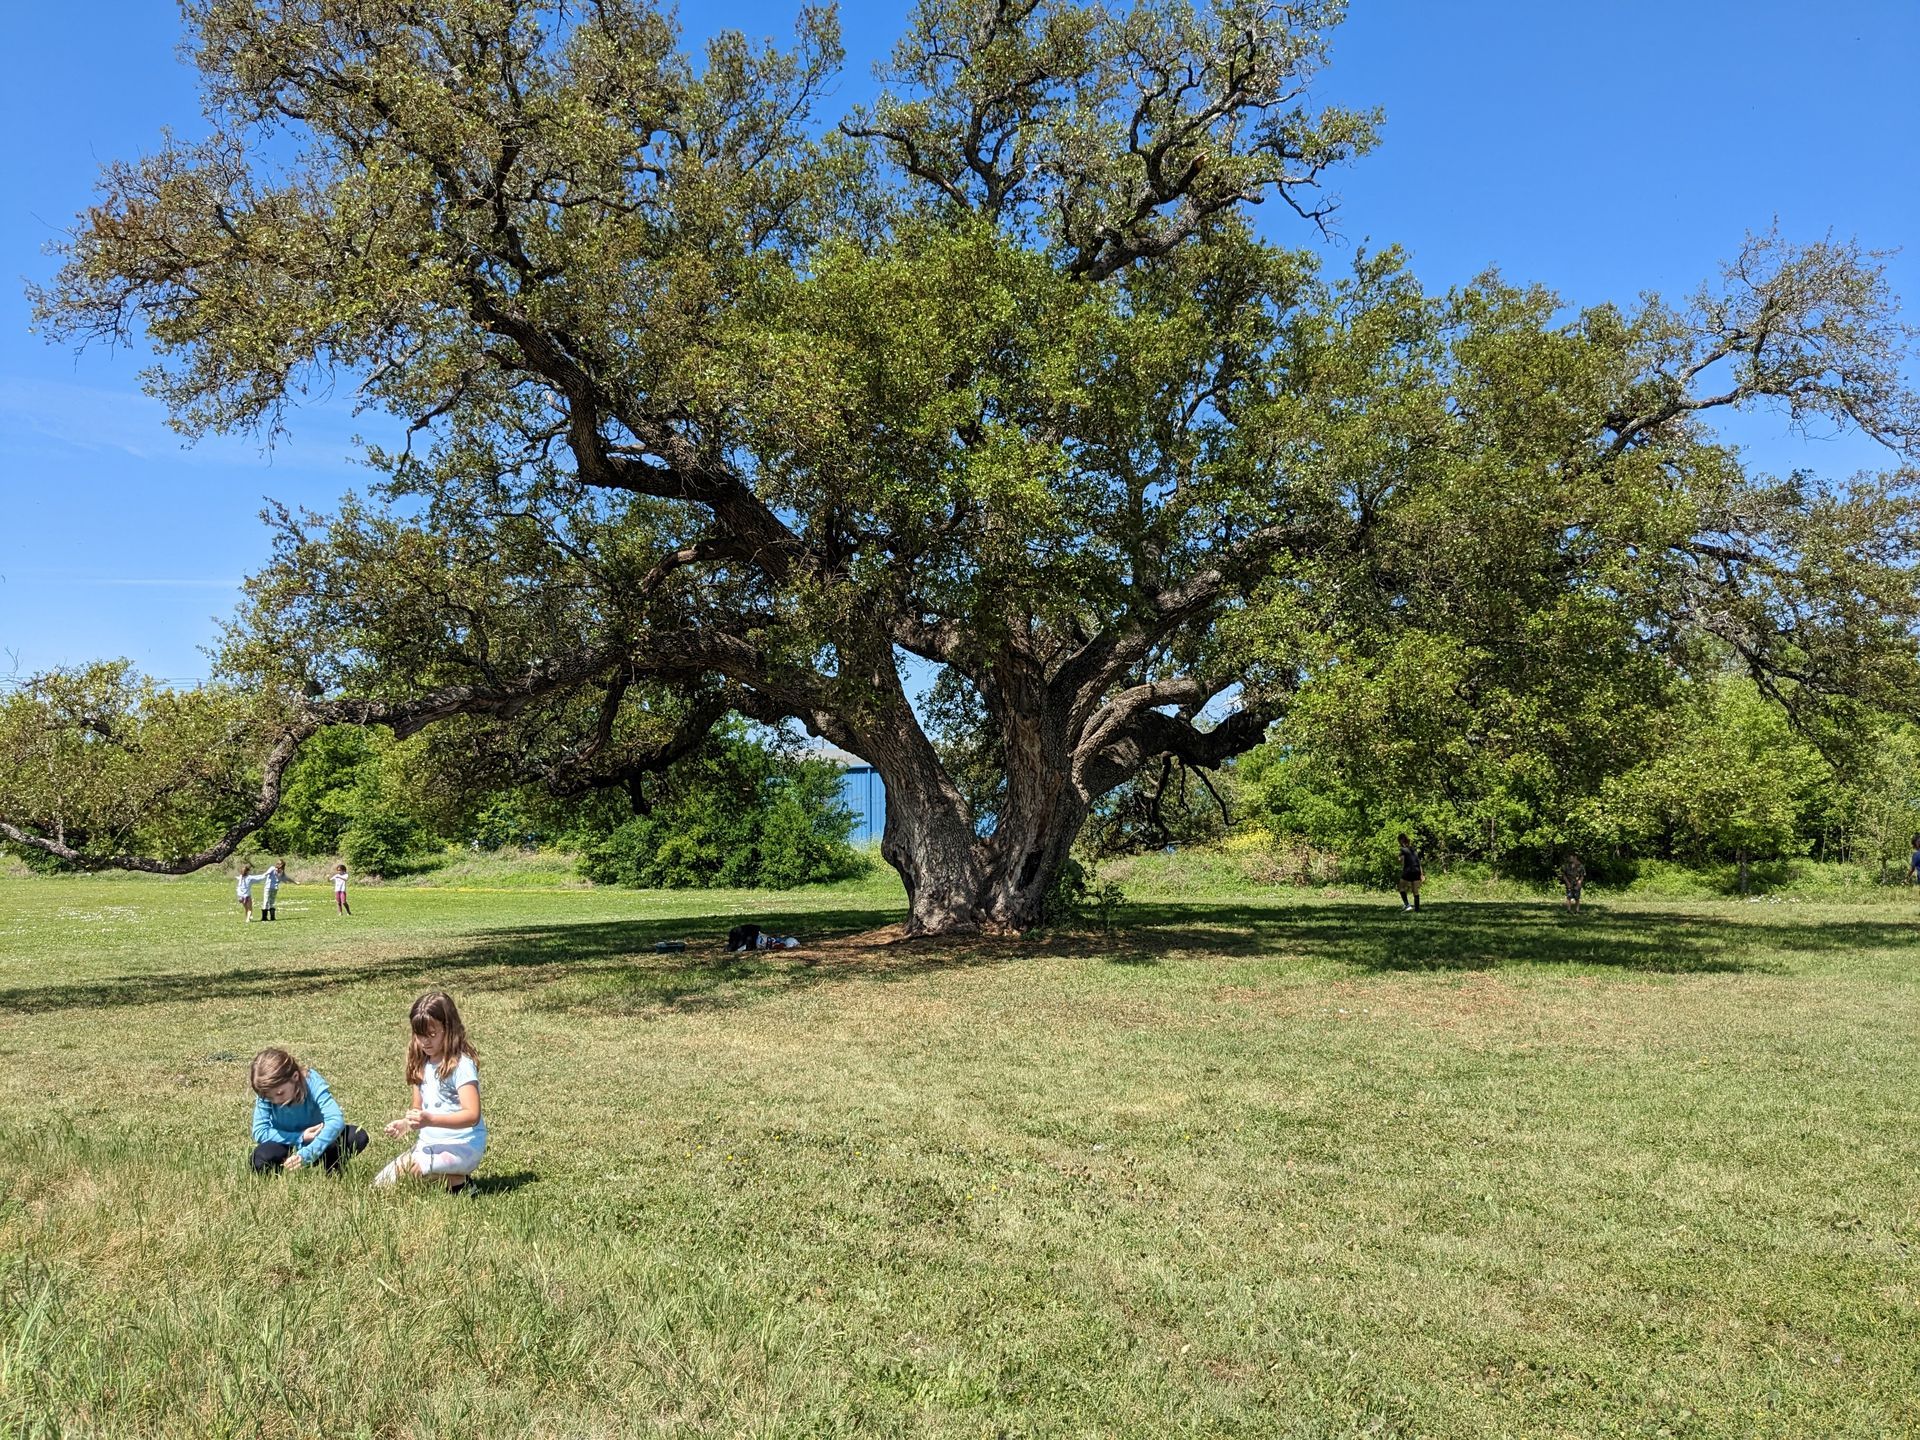 Two Montessori children sitting under a tree in a grassy field